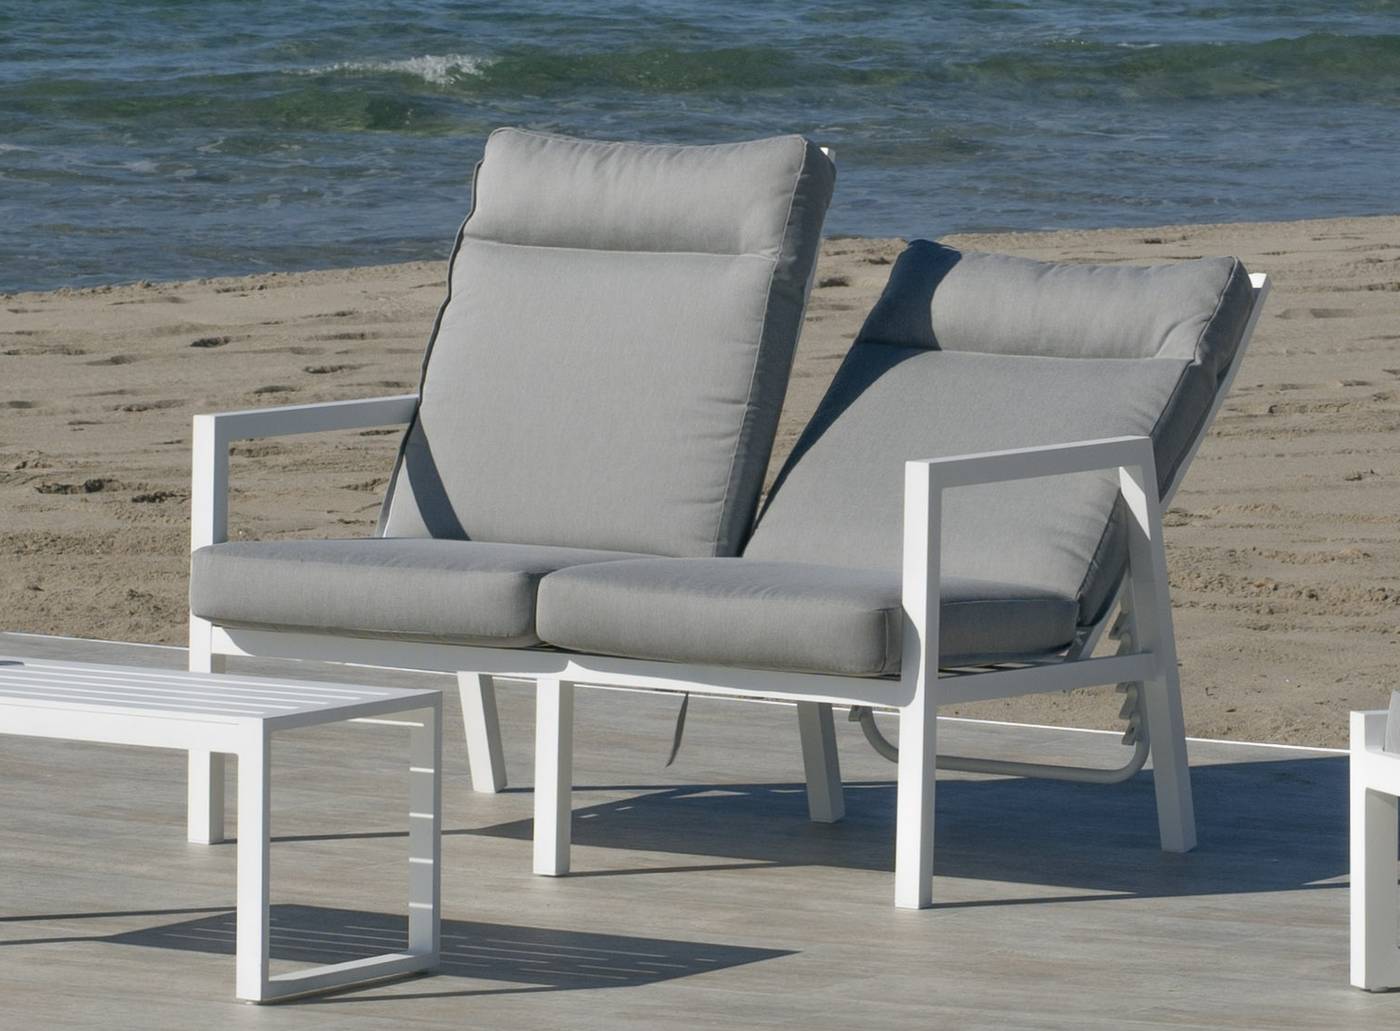 Sofá relax lujo 2 plazas, con respaldos reclinables. Fabricado de aluminio en color blanco, antracita, champagne, plata o marrón.